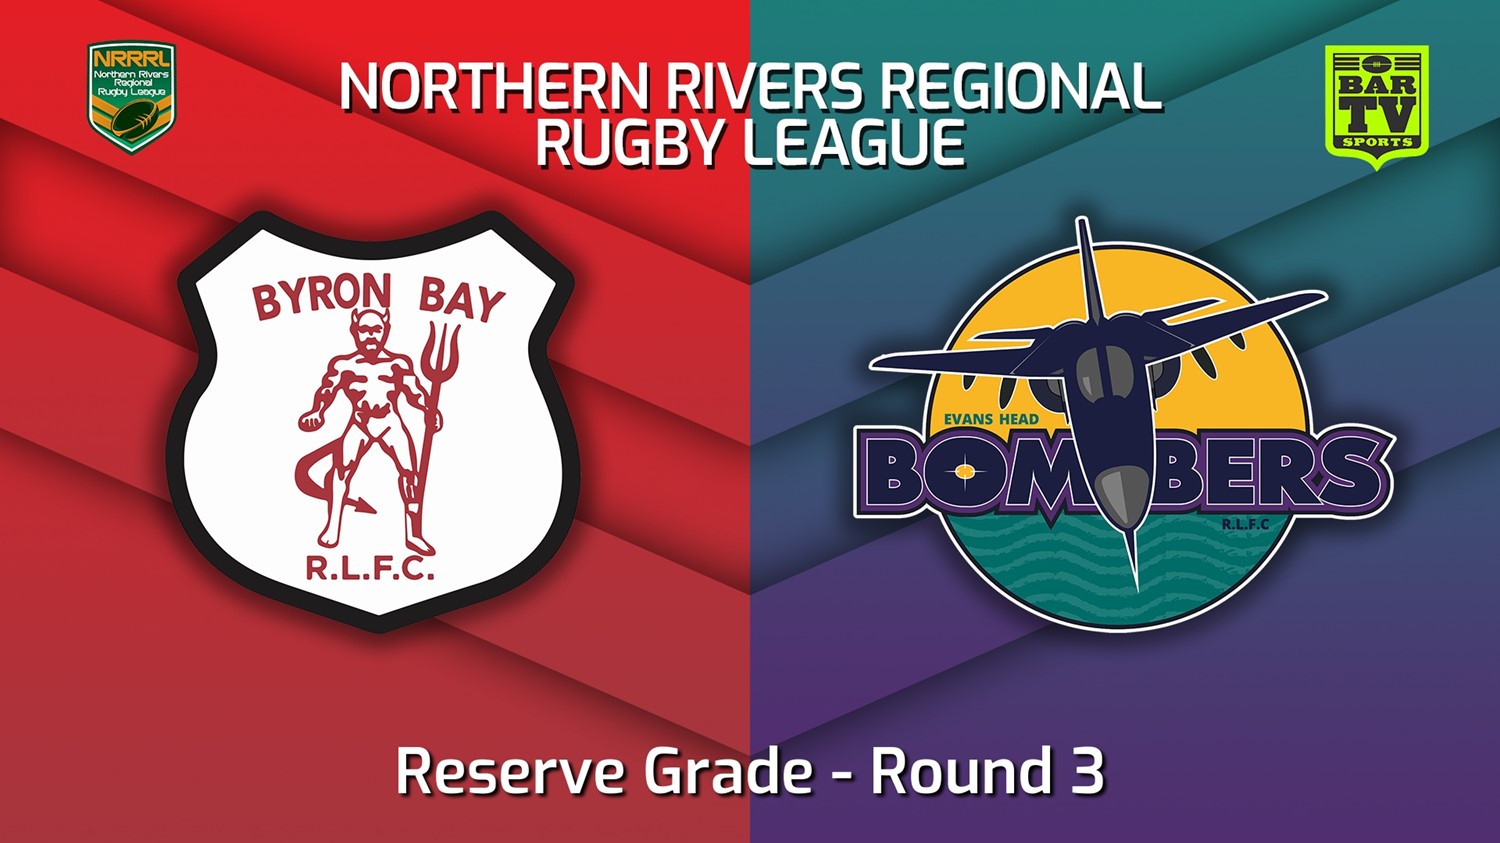 220508-Northern Rivers Round 3 - Reserve Grade - Byron Bay Red Devils v Evans Head Bombers Slate Image